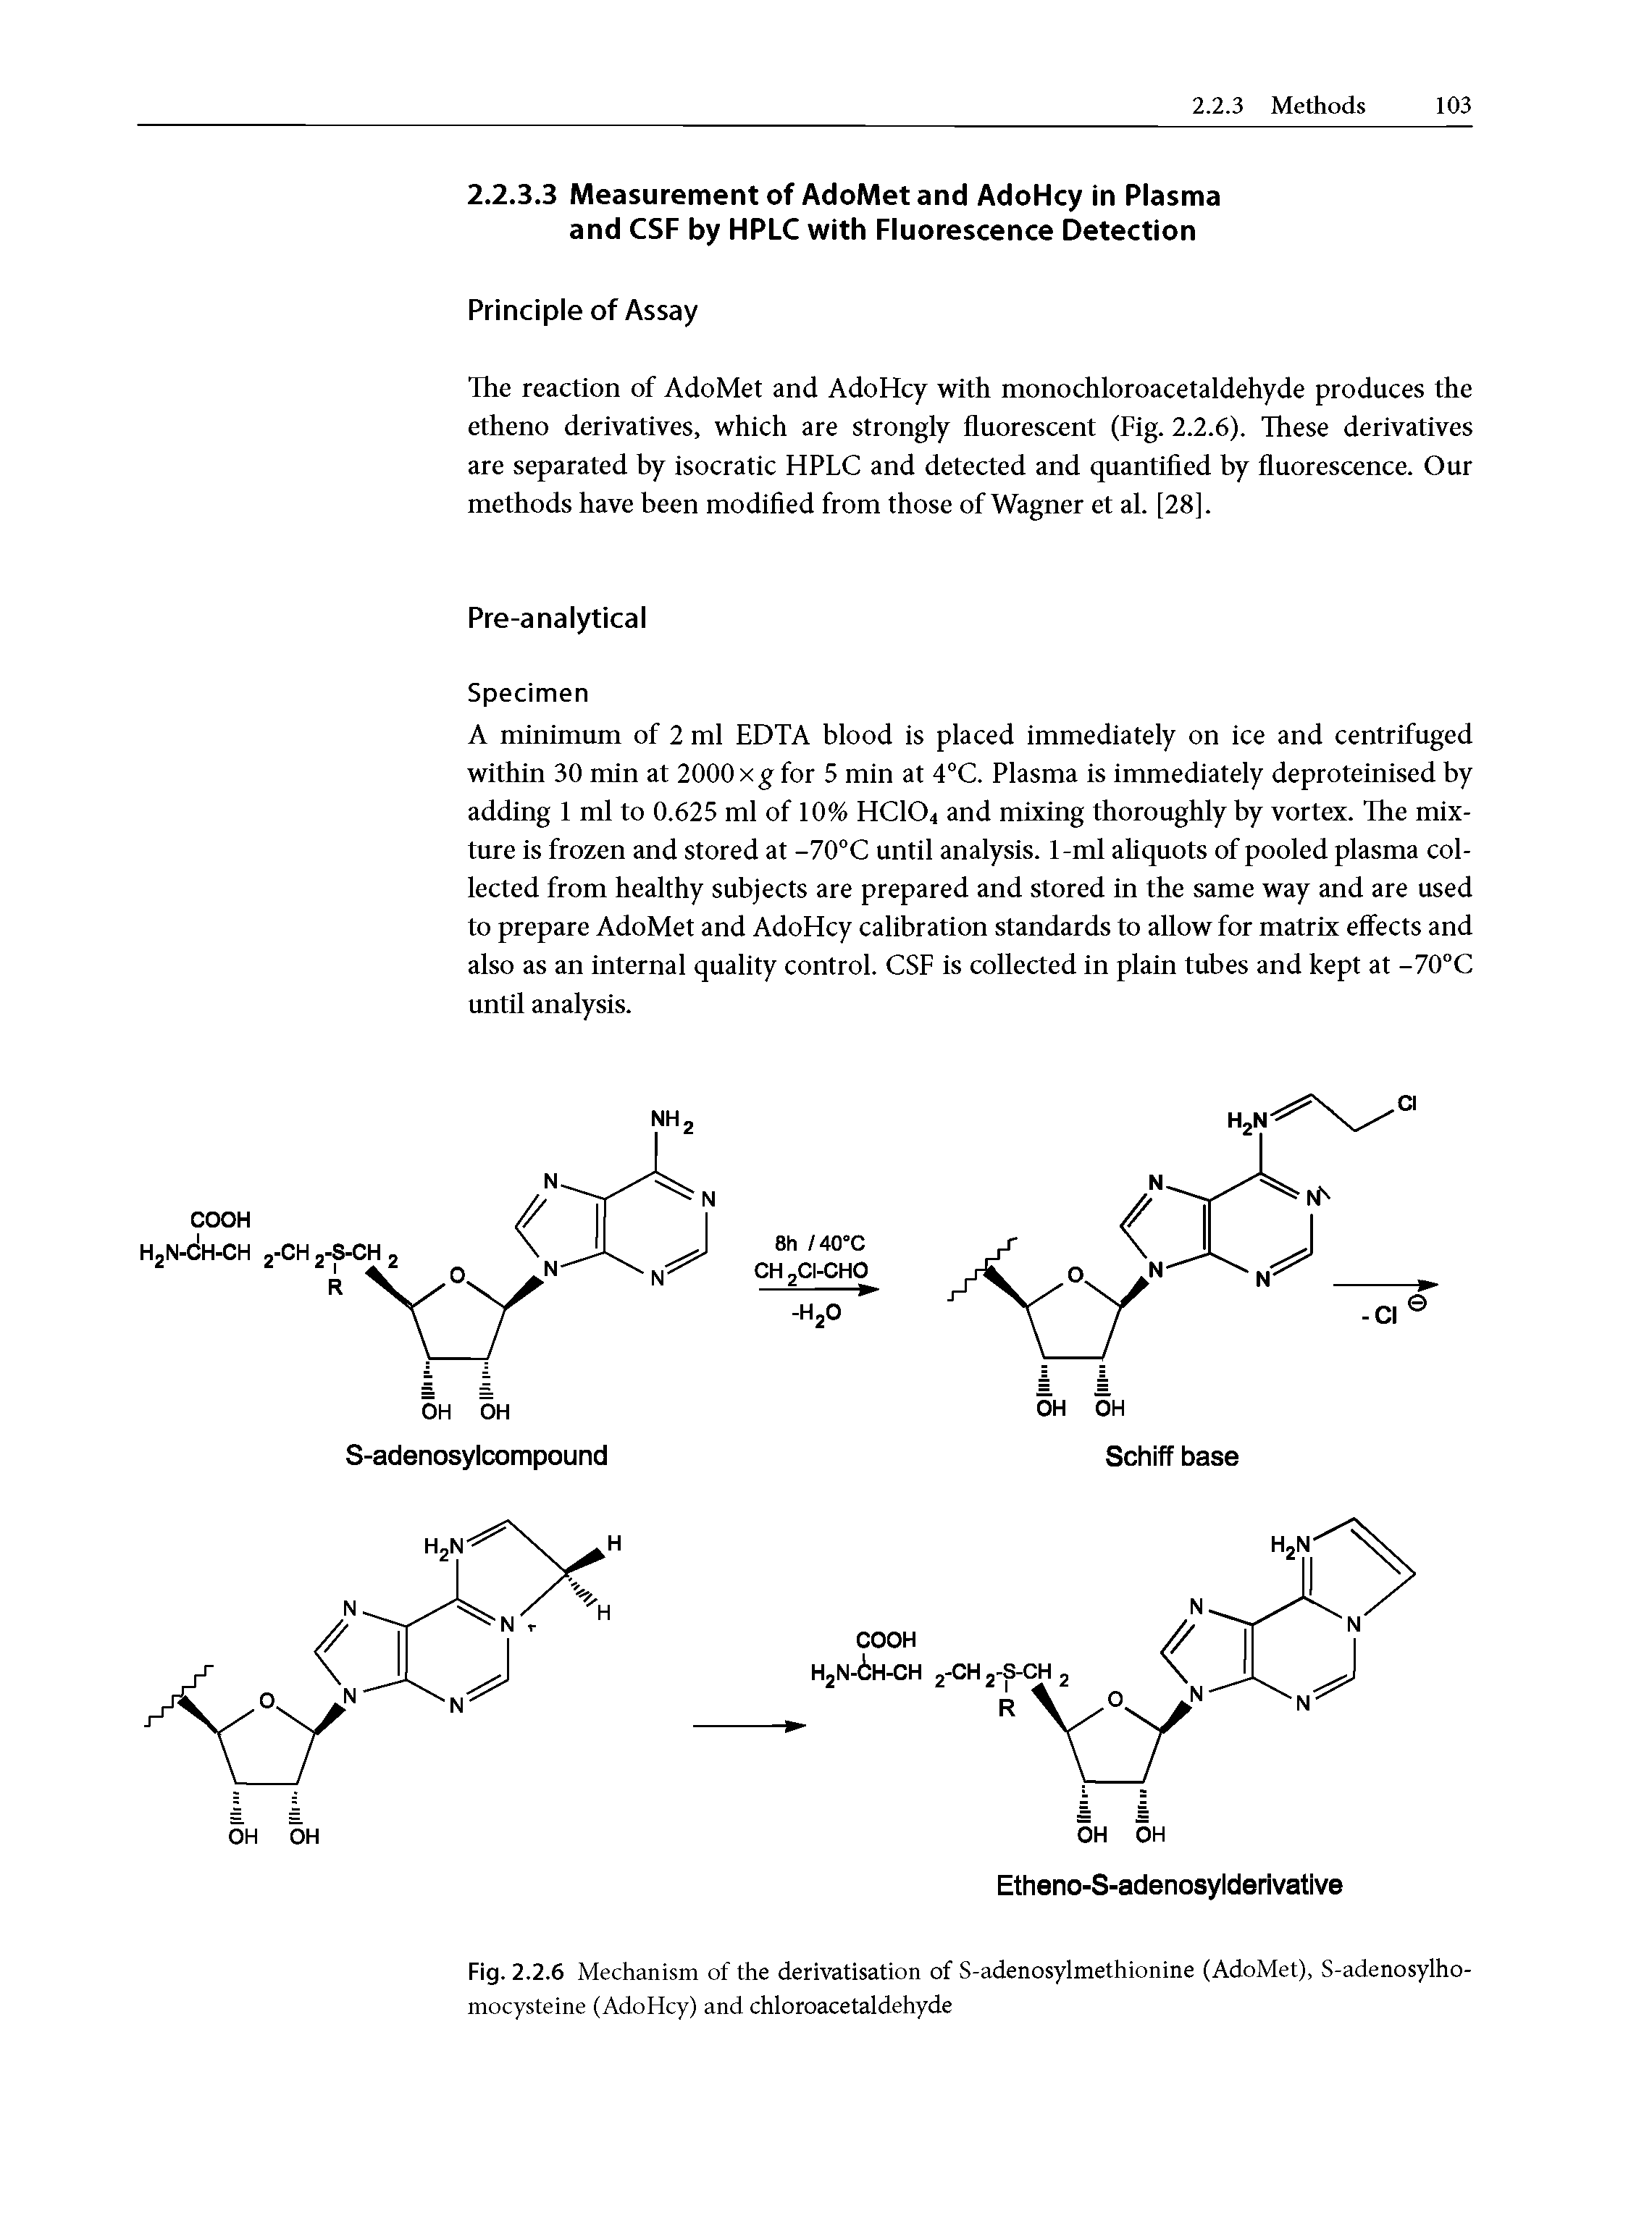 Fig. 2.2.6 Mechanism of the derivatisation of S-adenosylmethionine (AdoMet), S-adenosylho-mocysteine (AdoHcy) and chloroacetaldehyde...